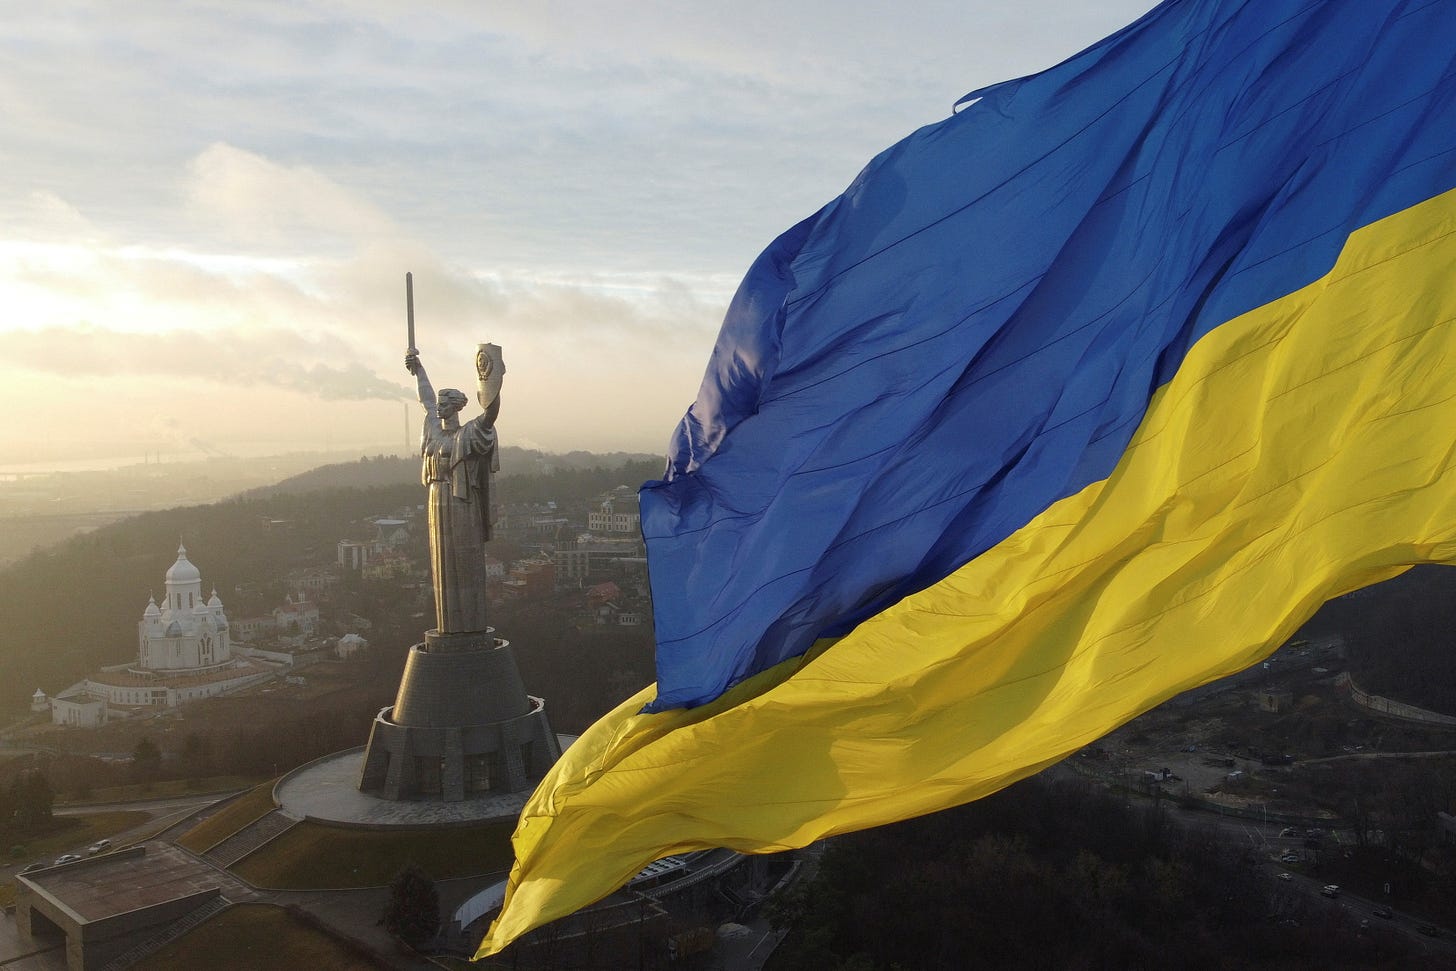 We fear no one:&quot; Ukrainians raise flags to defy Russia invasion fear |  Reuters